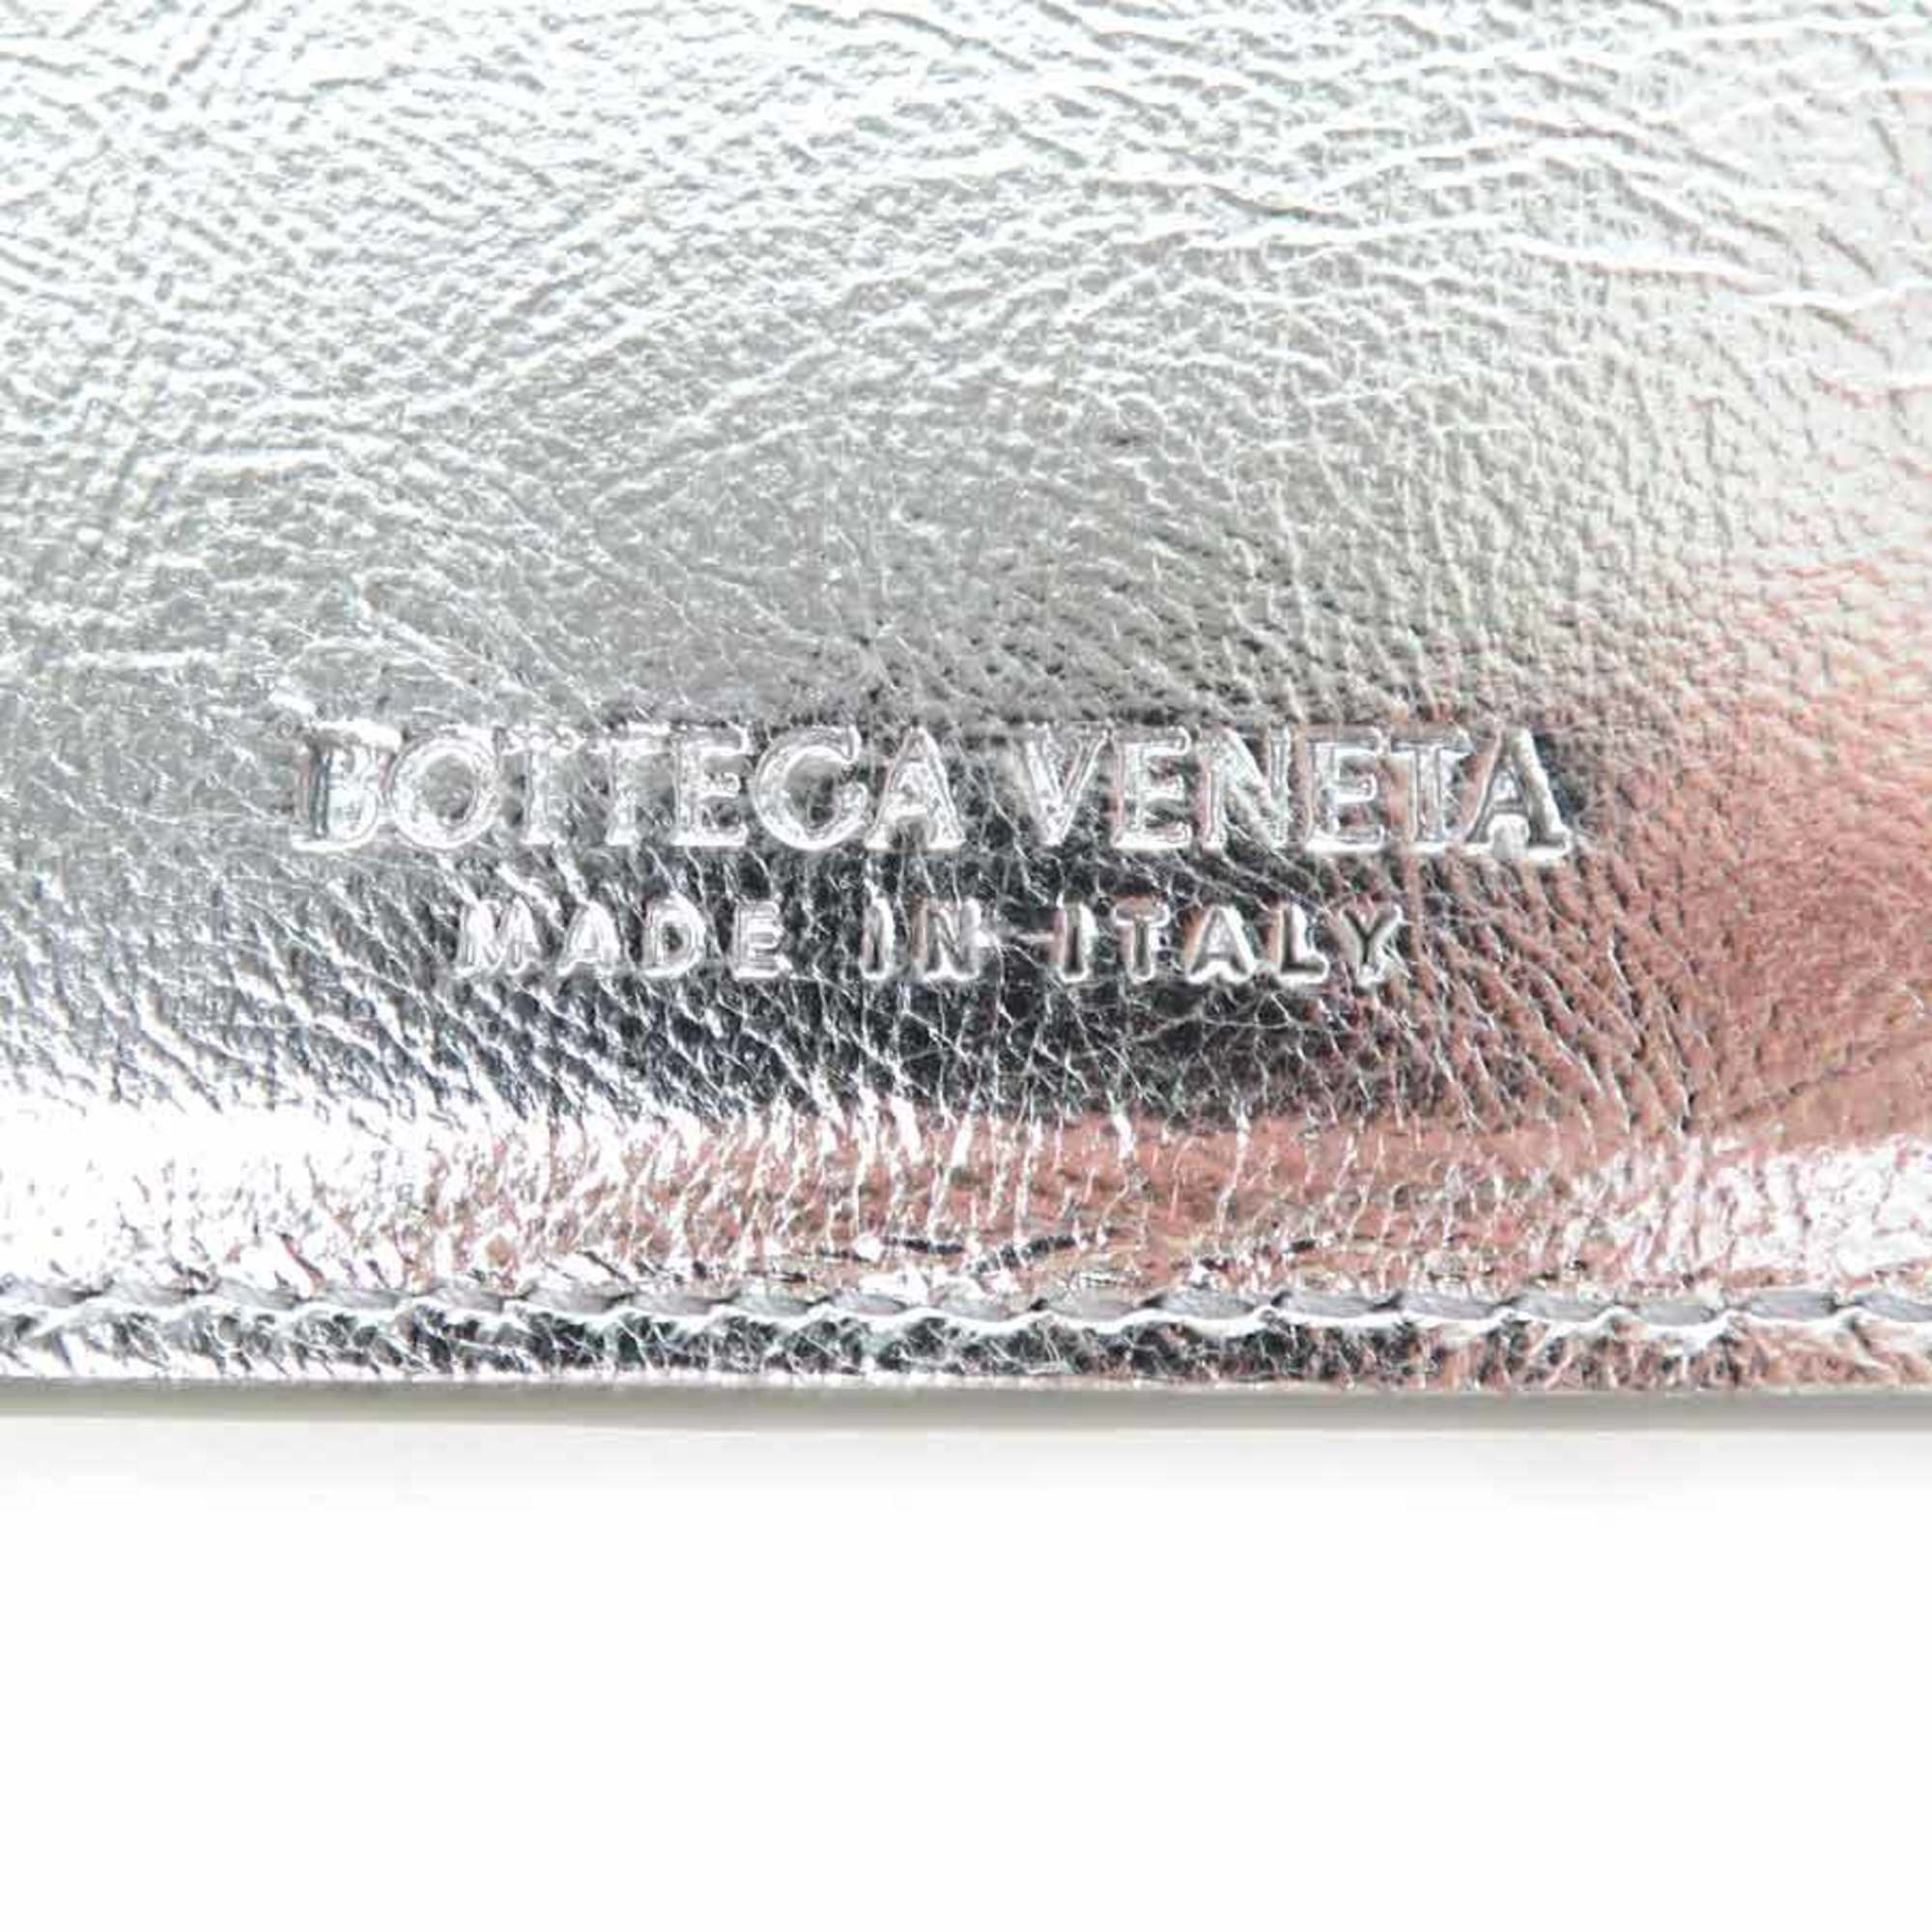 Bottega Veneta BOTTEGAVENETA Wallet Leather Silver Men's h29457g